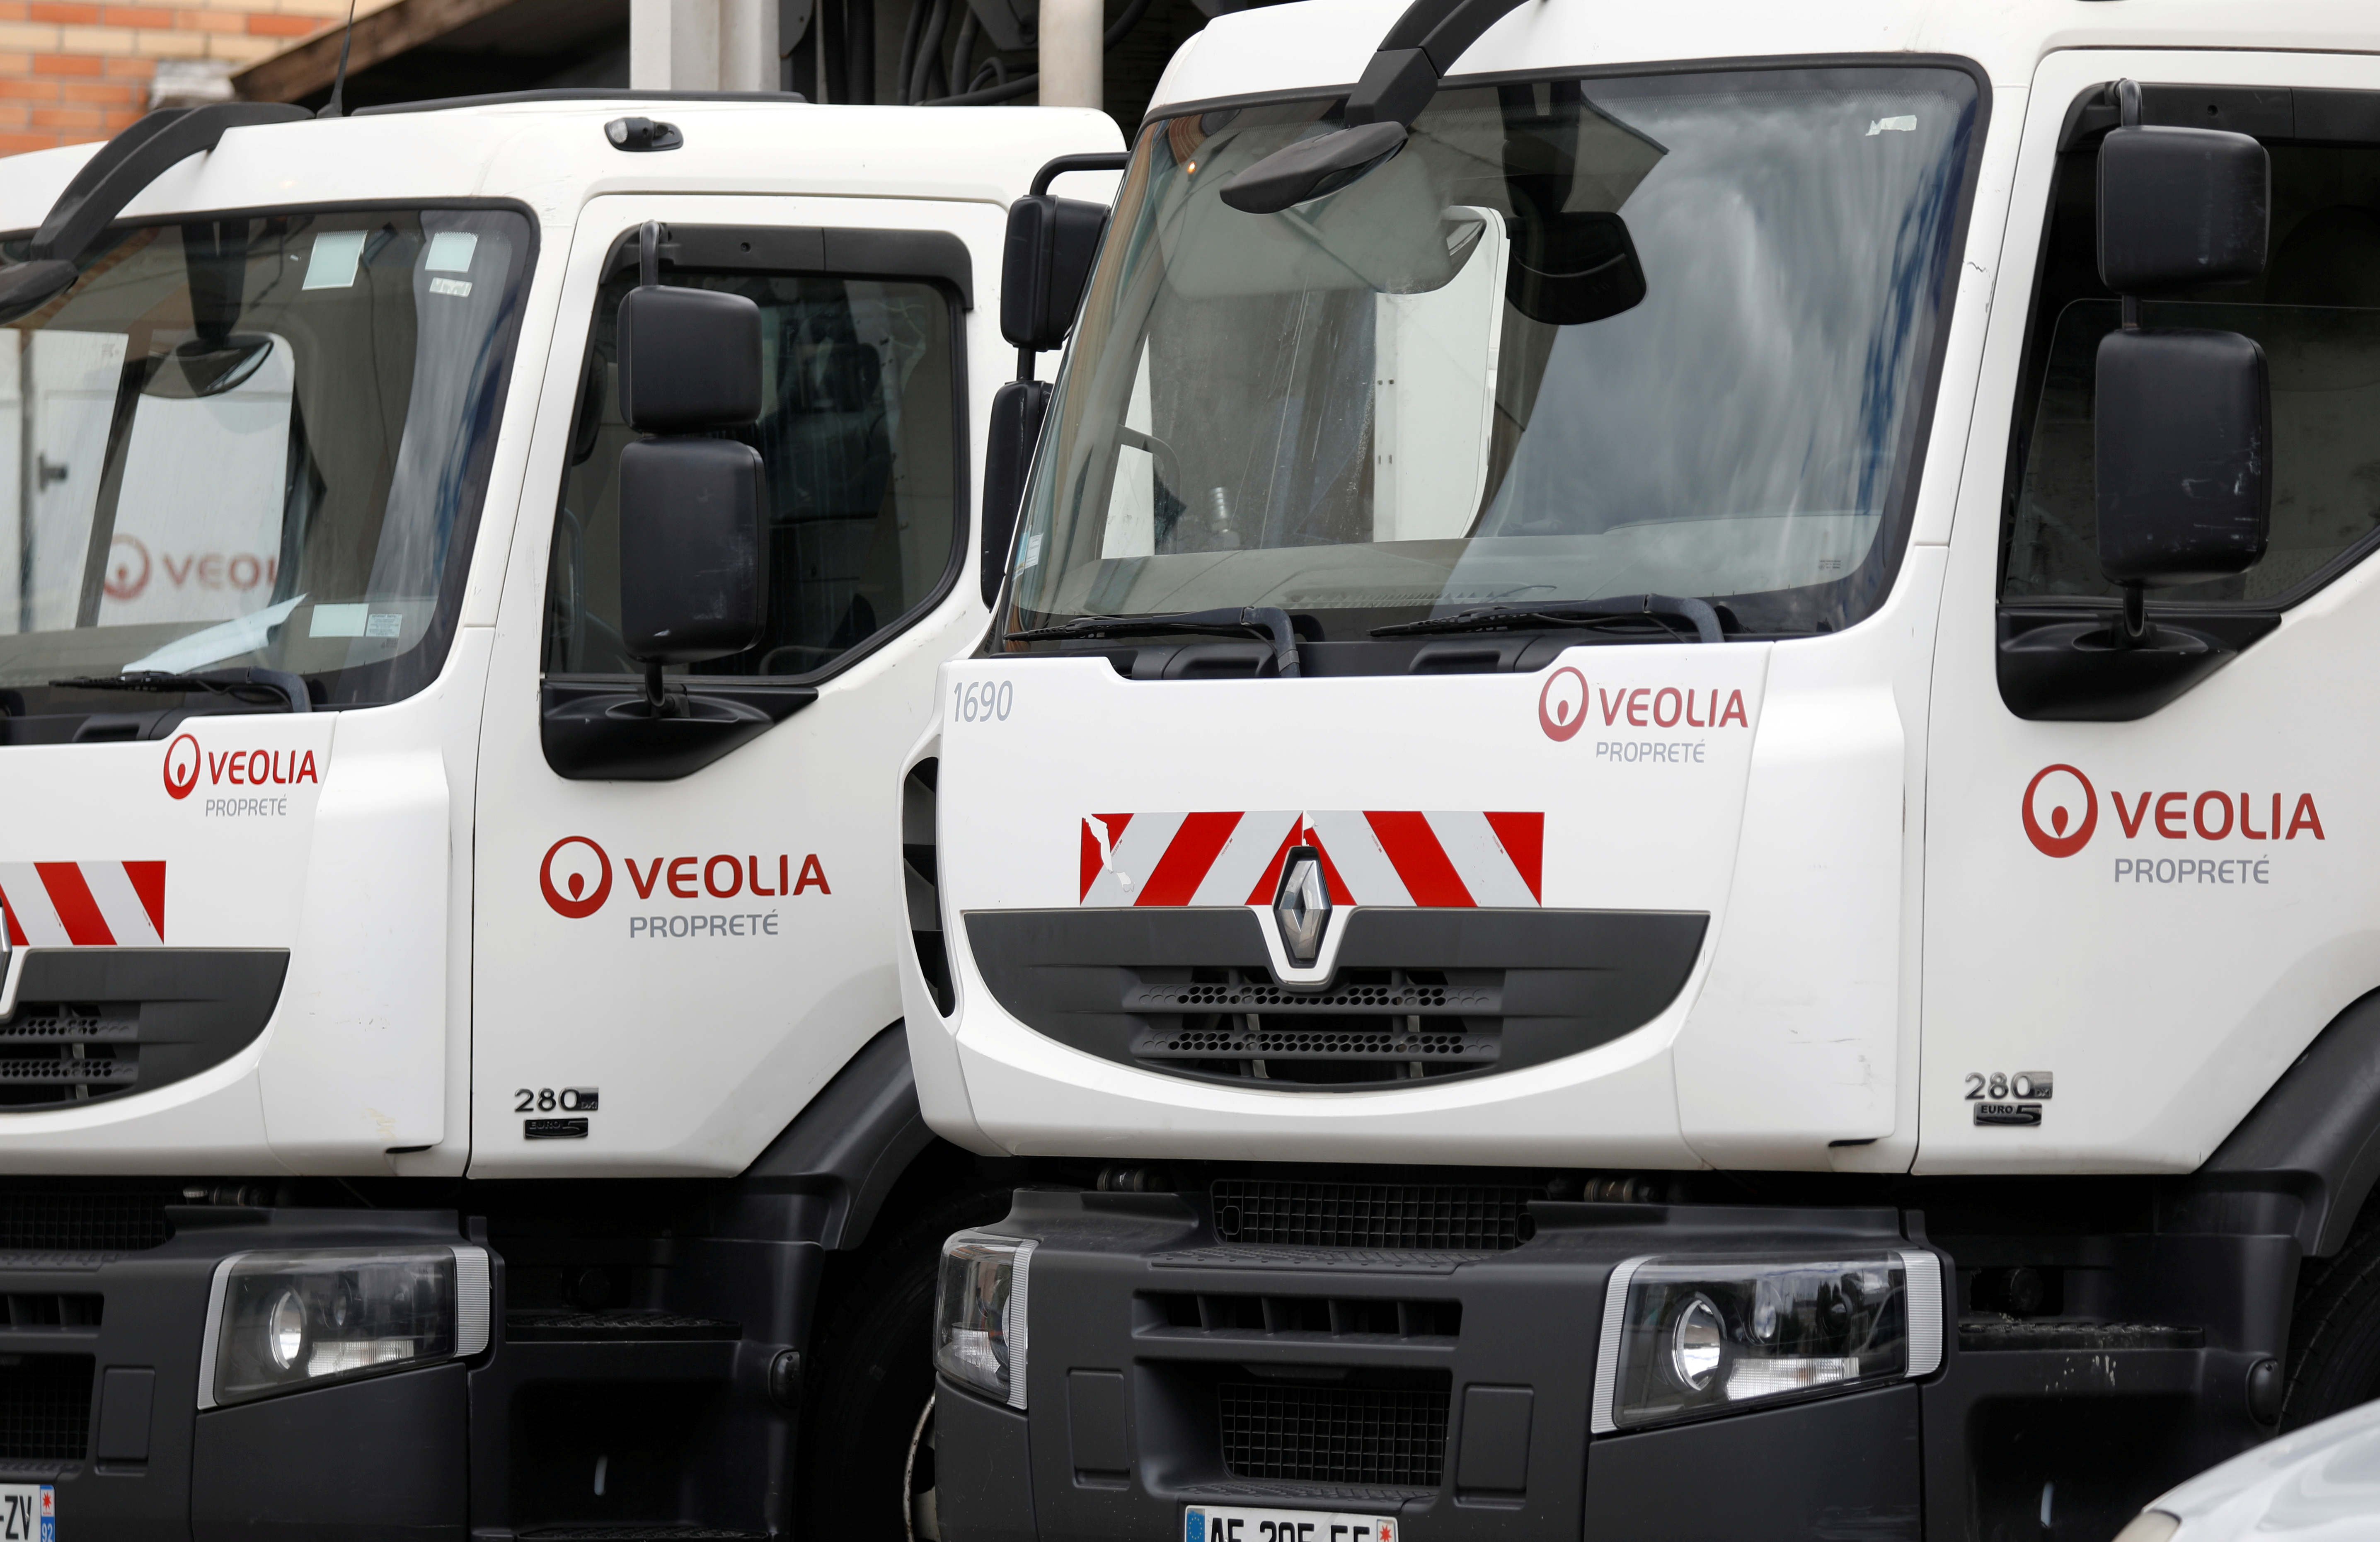 The logo of Veolia